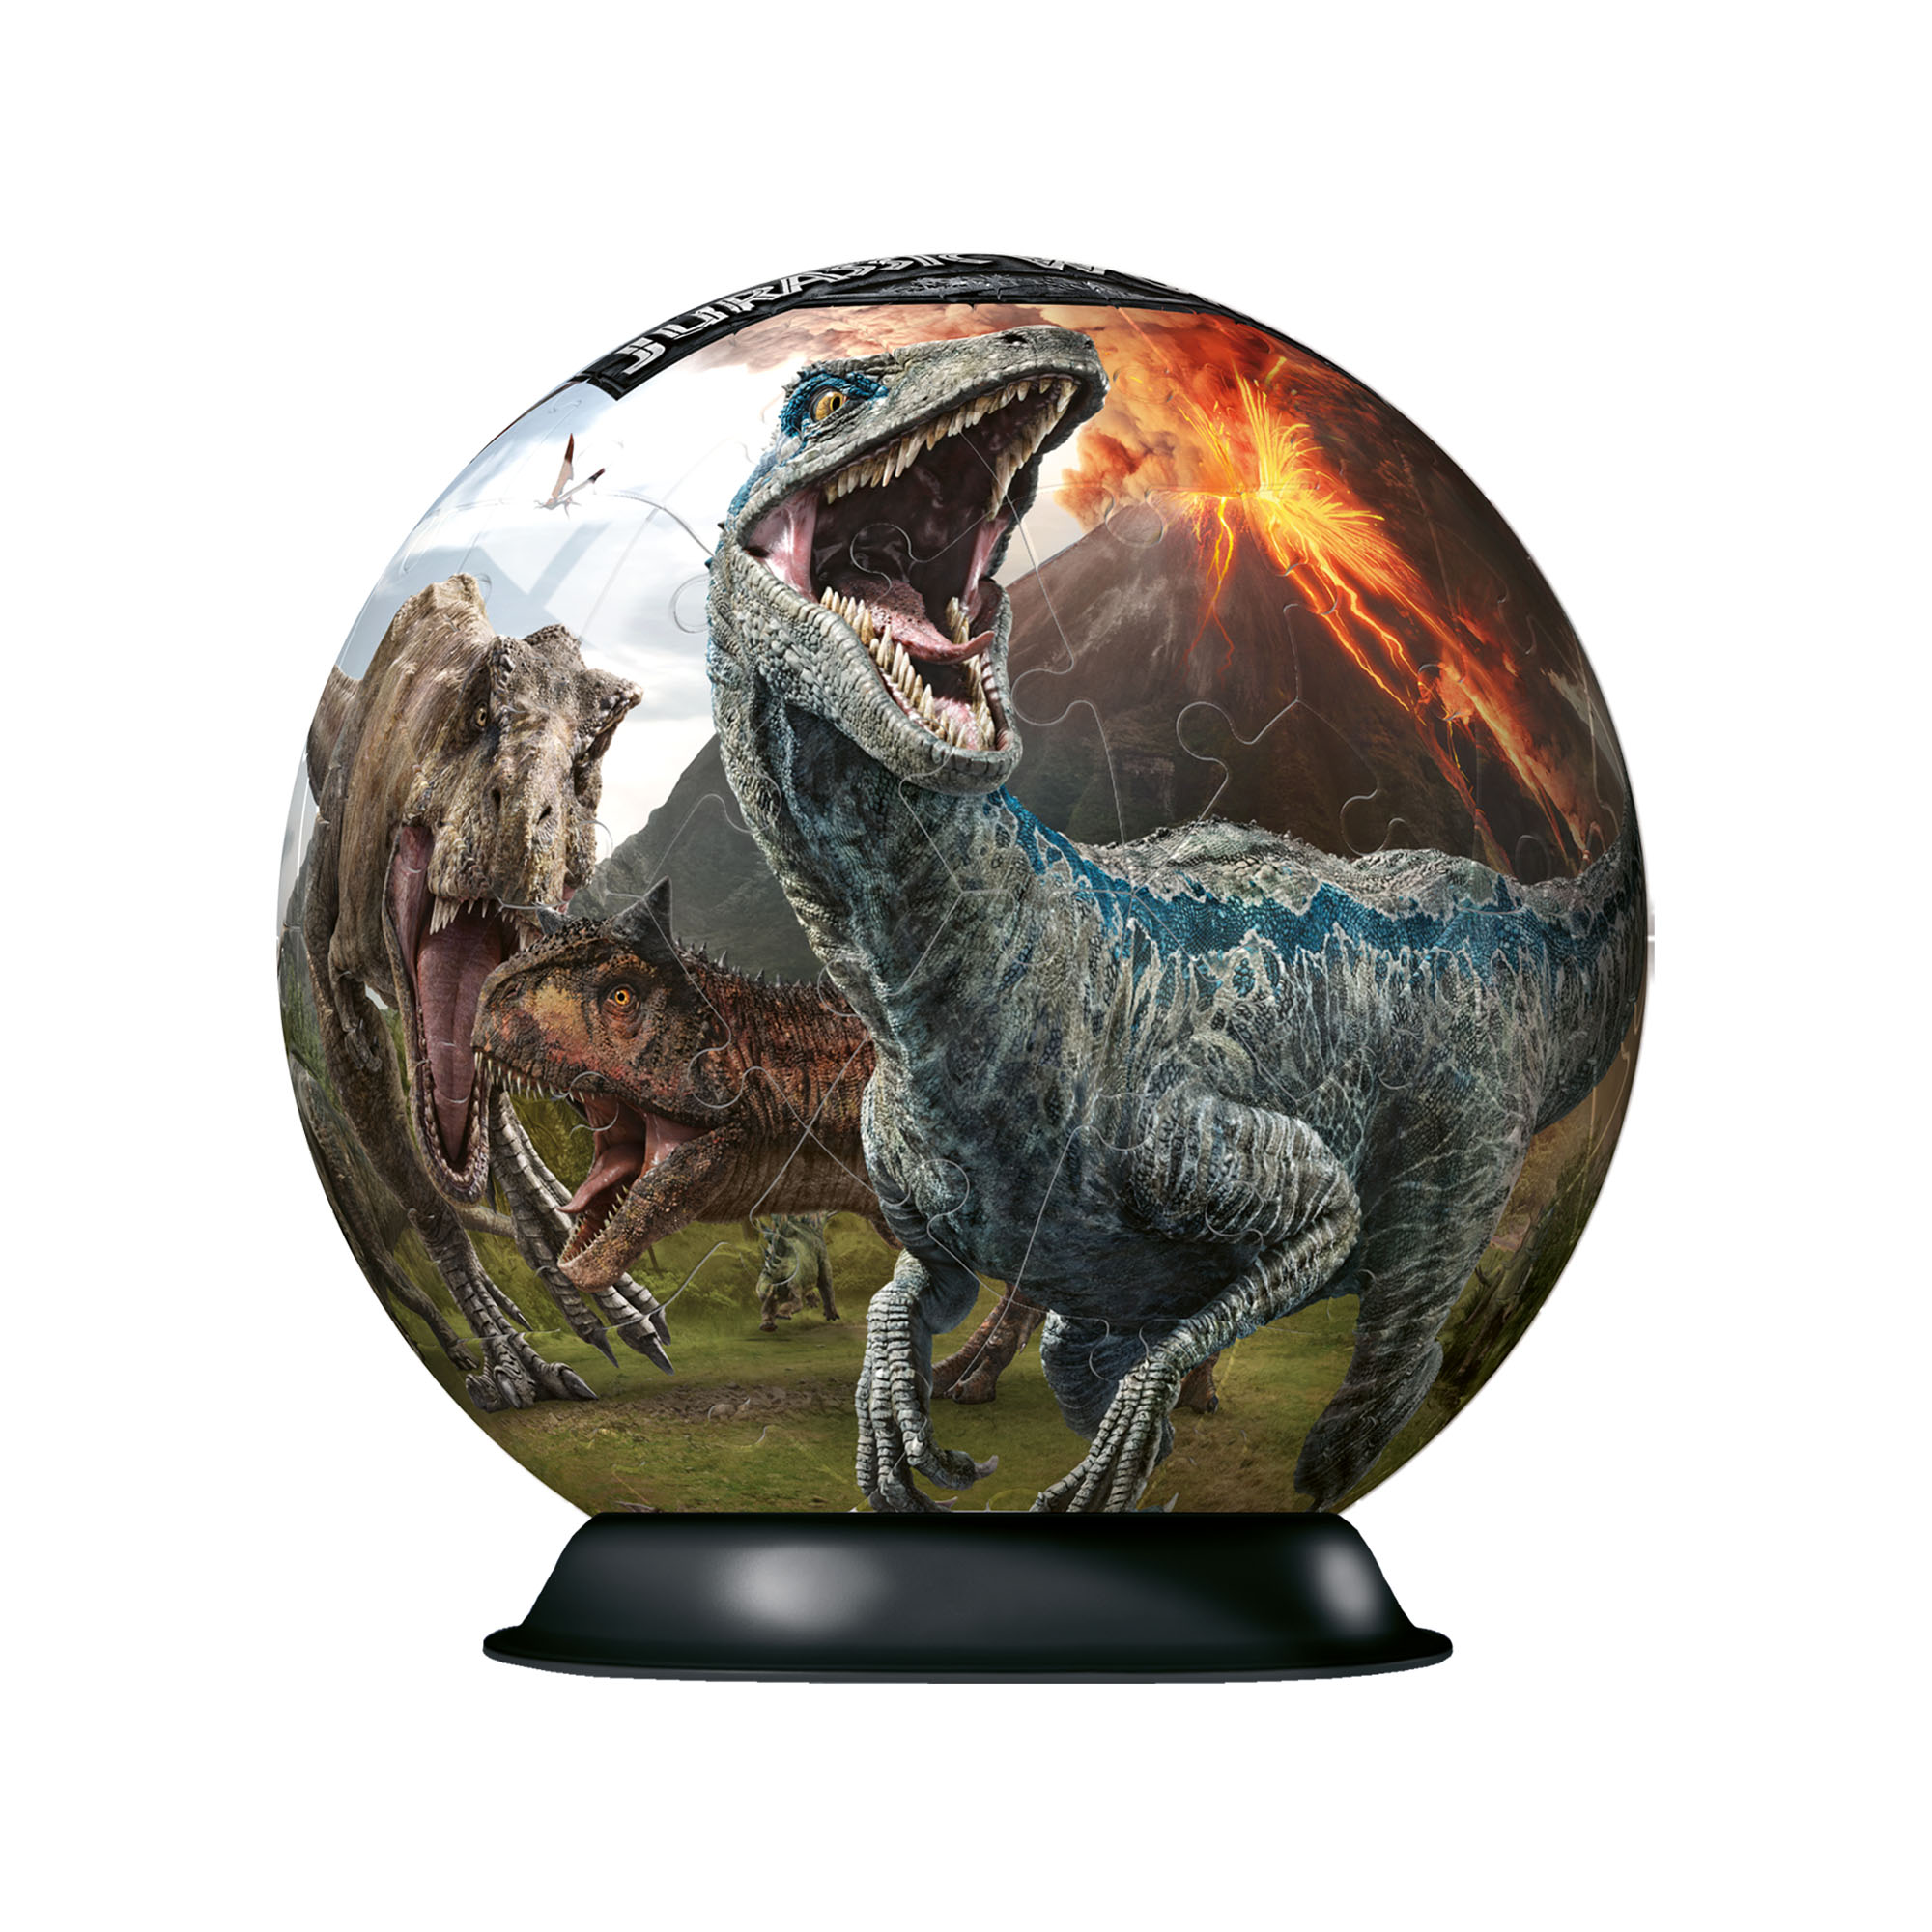 Ravensburger 3D Puzzleball 11757 - Jurassic World, , large